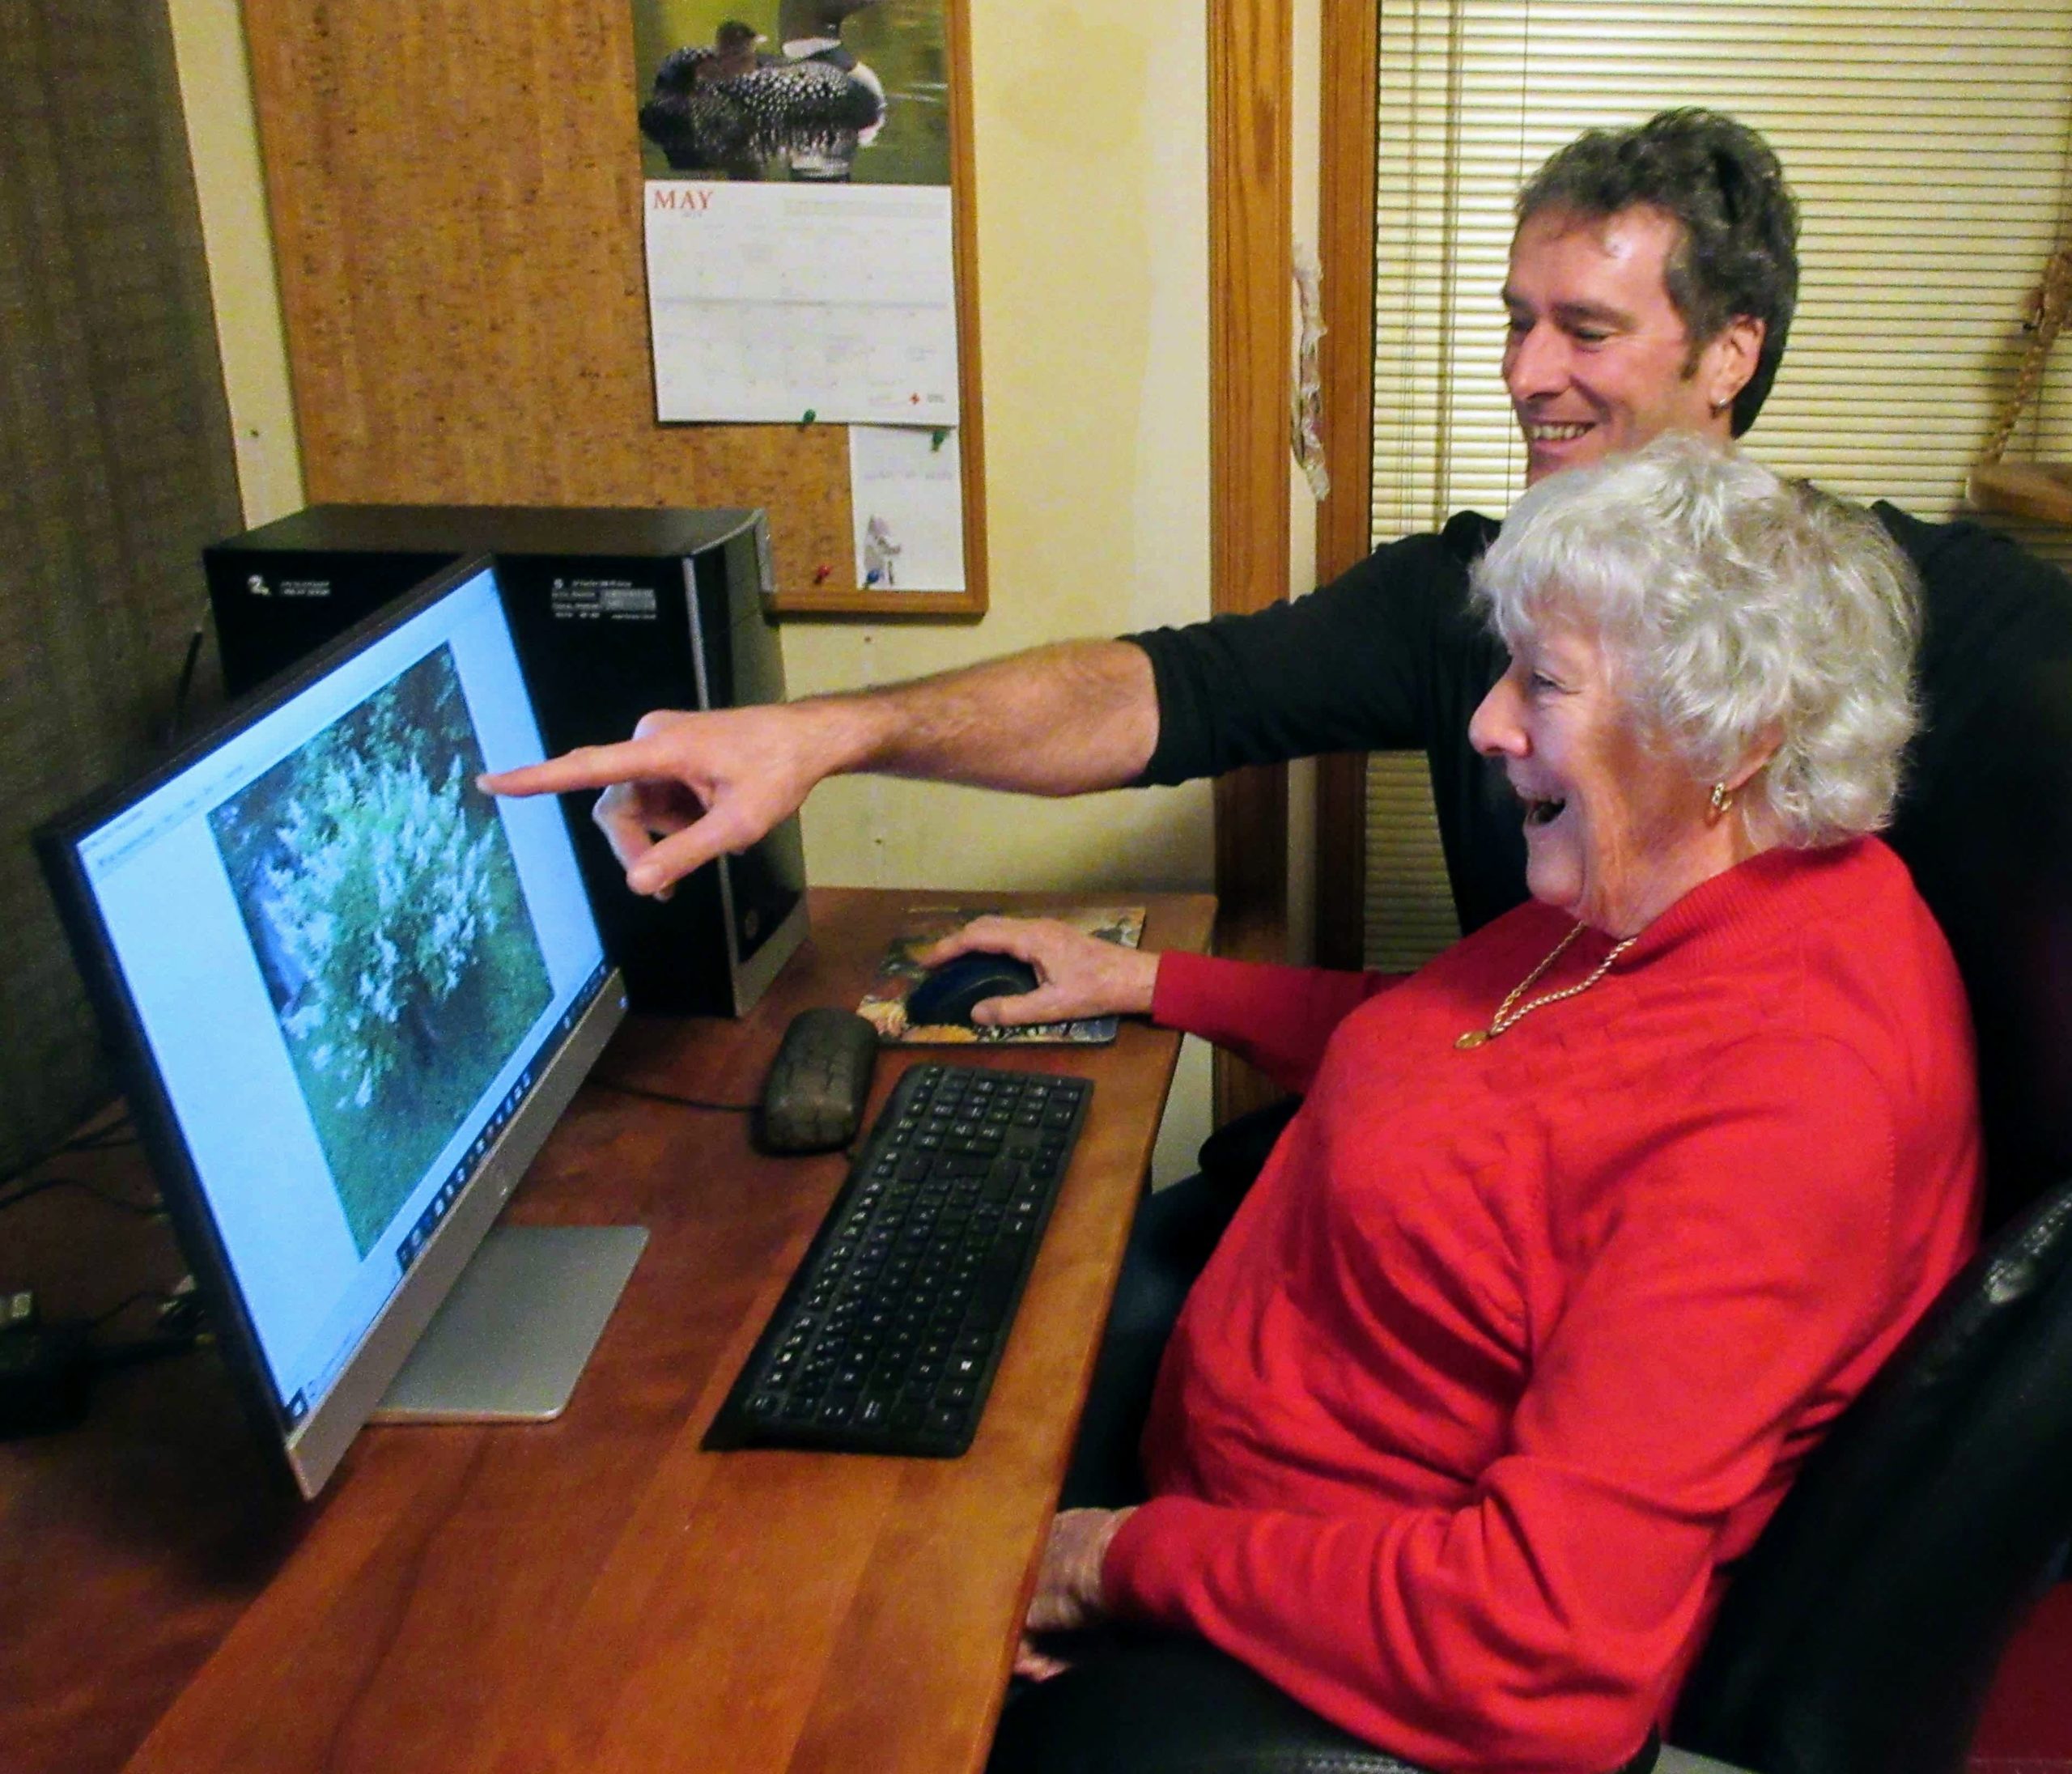 A man teaches an older woman how to use a desktop computer